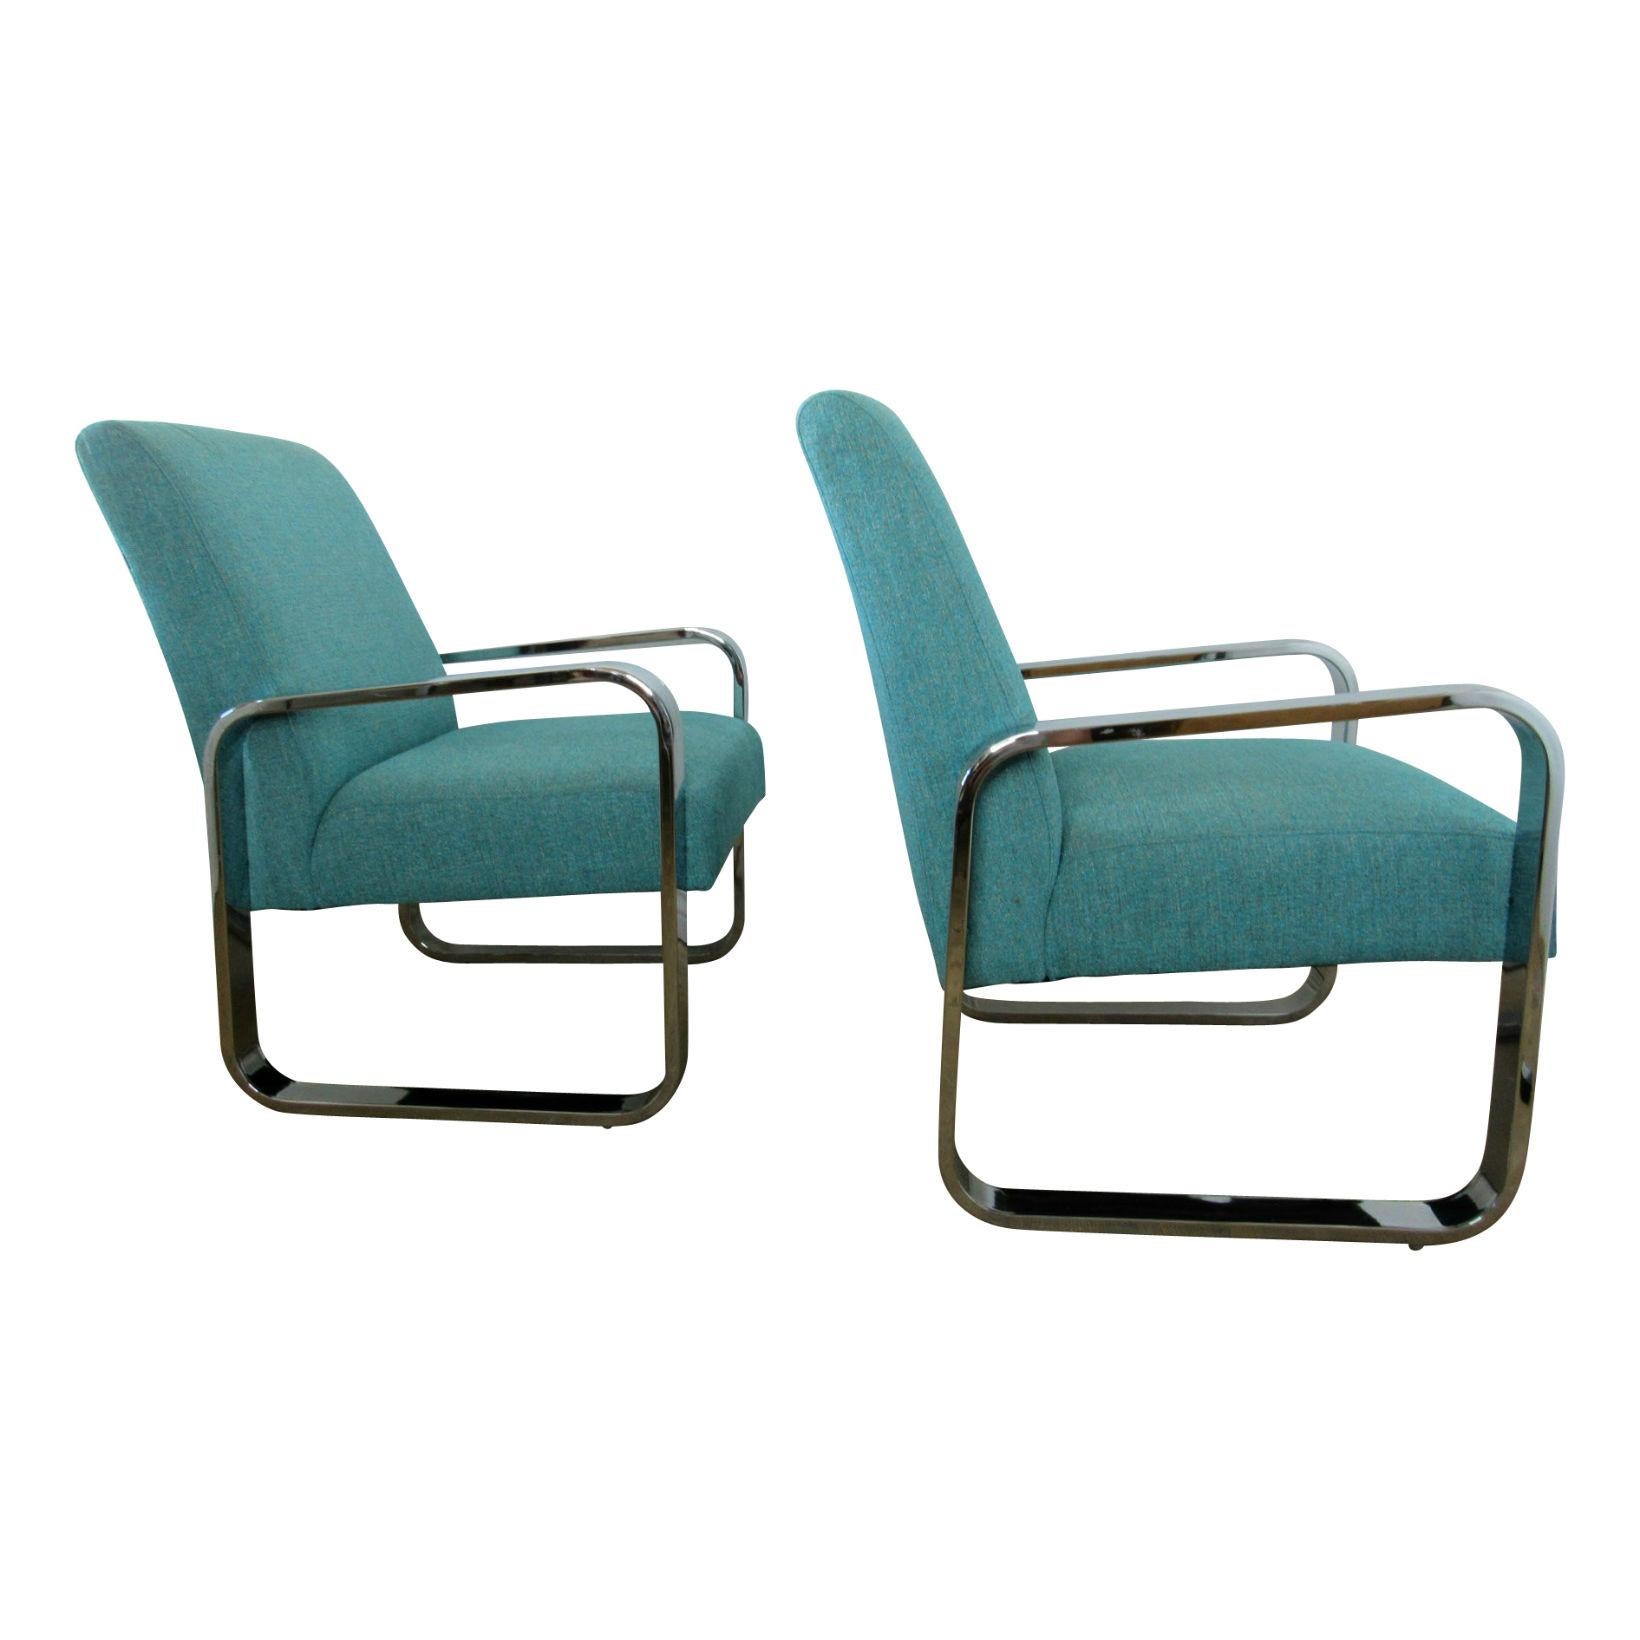 Pair of Milo Baughman sleek flat-bar chromed lounge chairs upholstered in cornflower blue chambray.